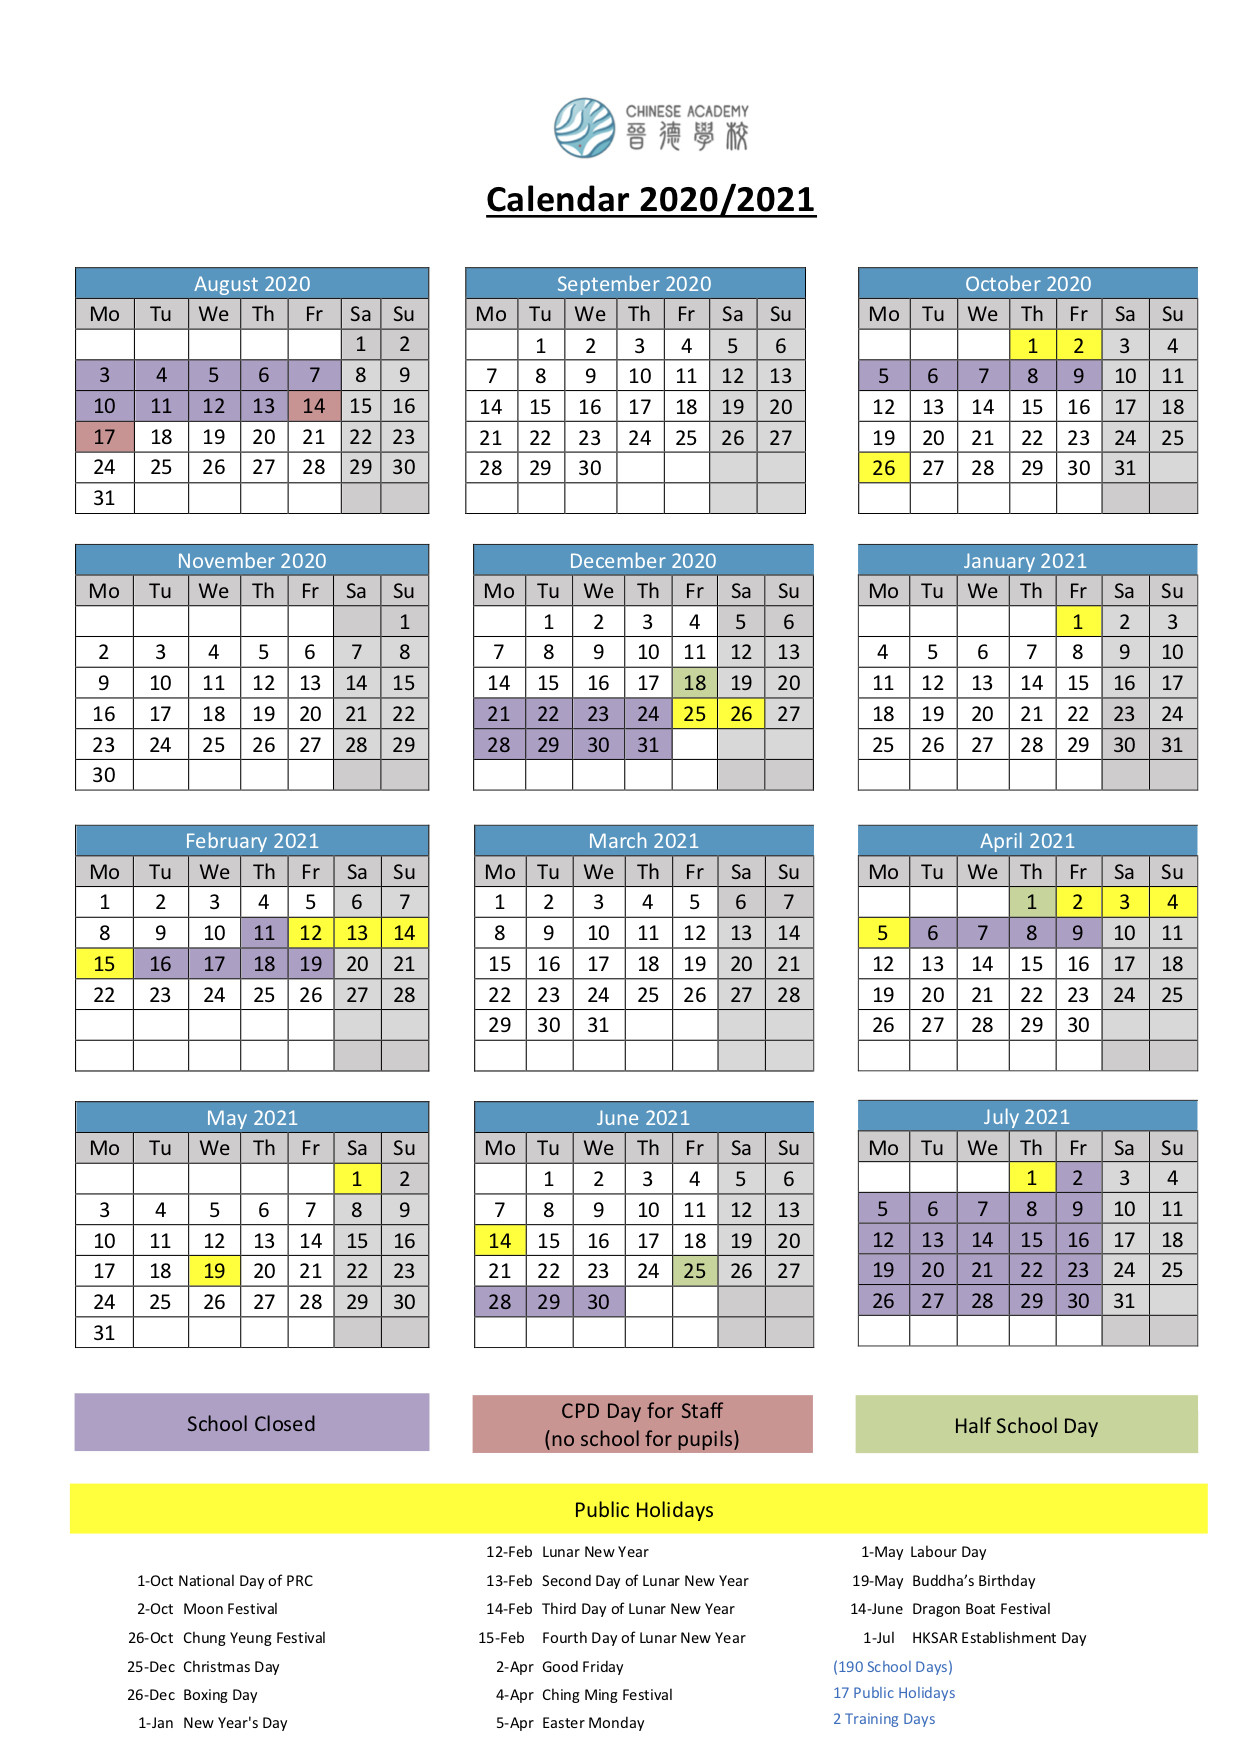 School Calendar 2020/2021 (Provisional) - International-International School Holidays For 2021